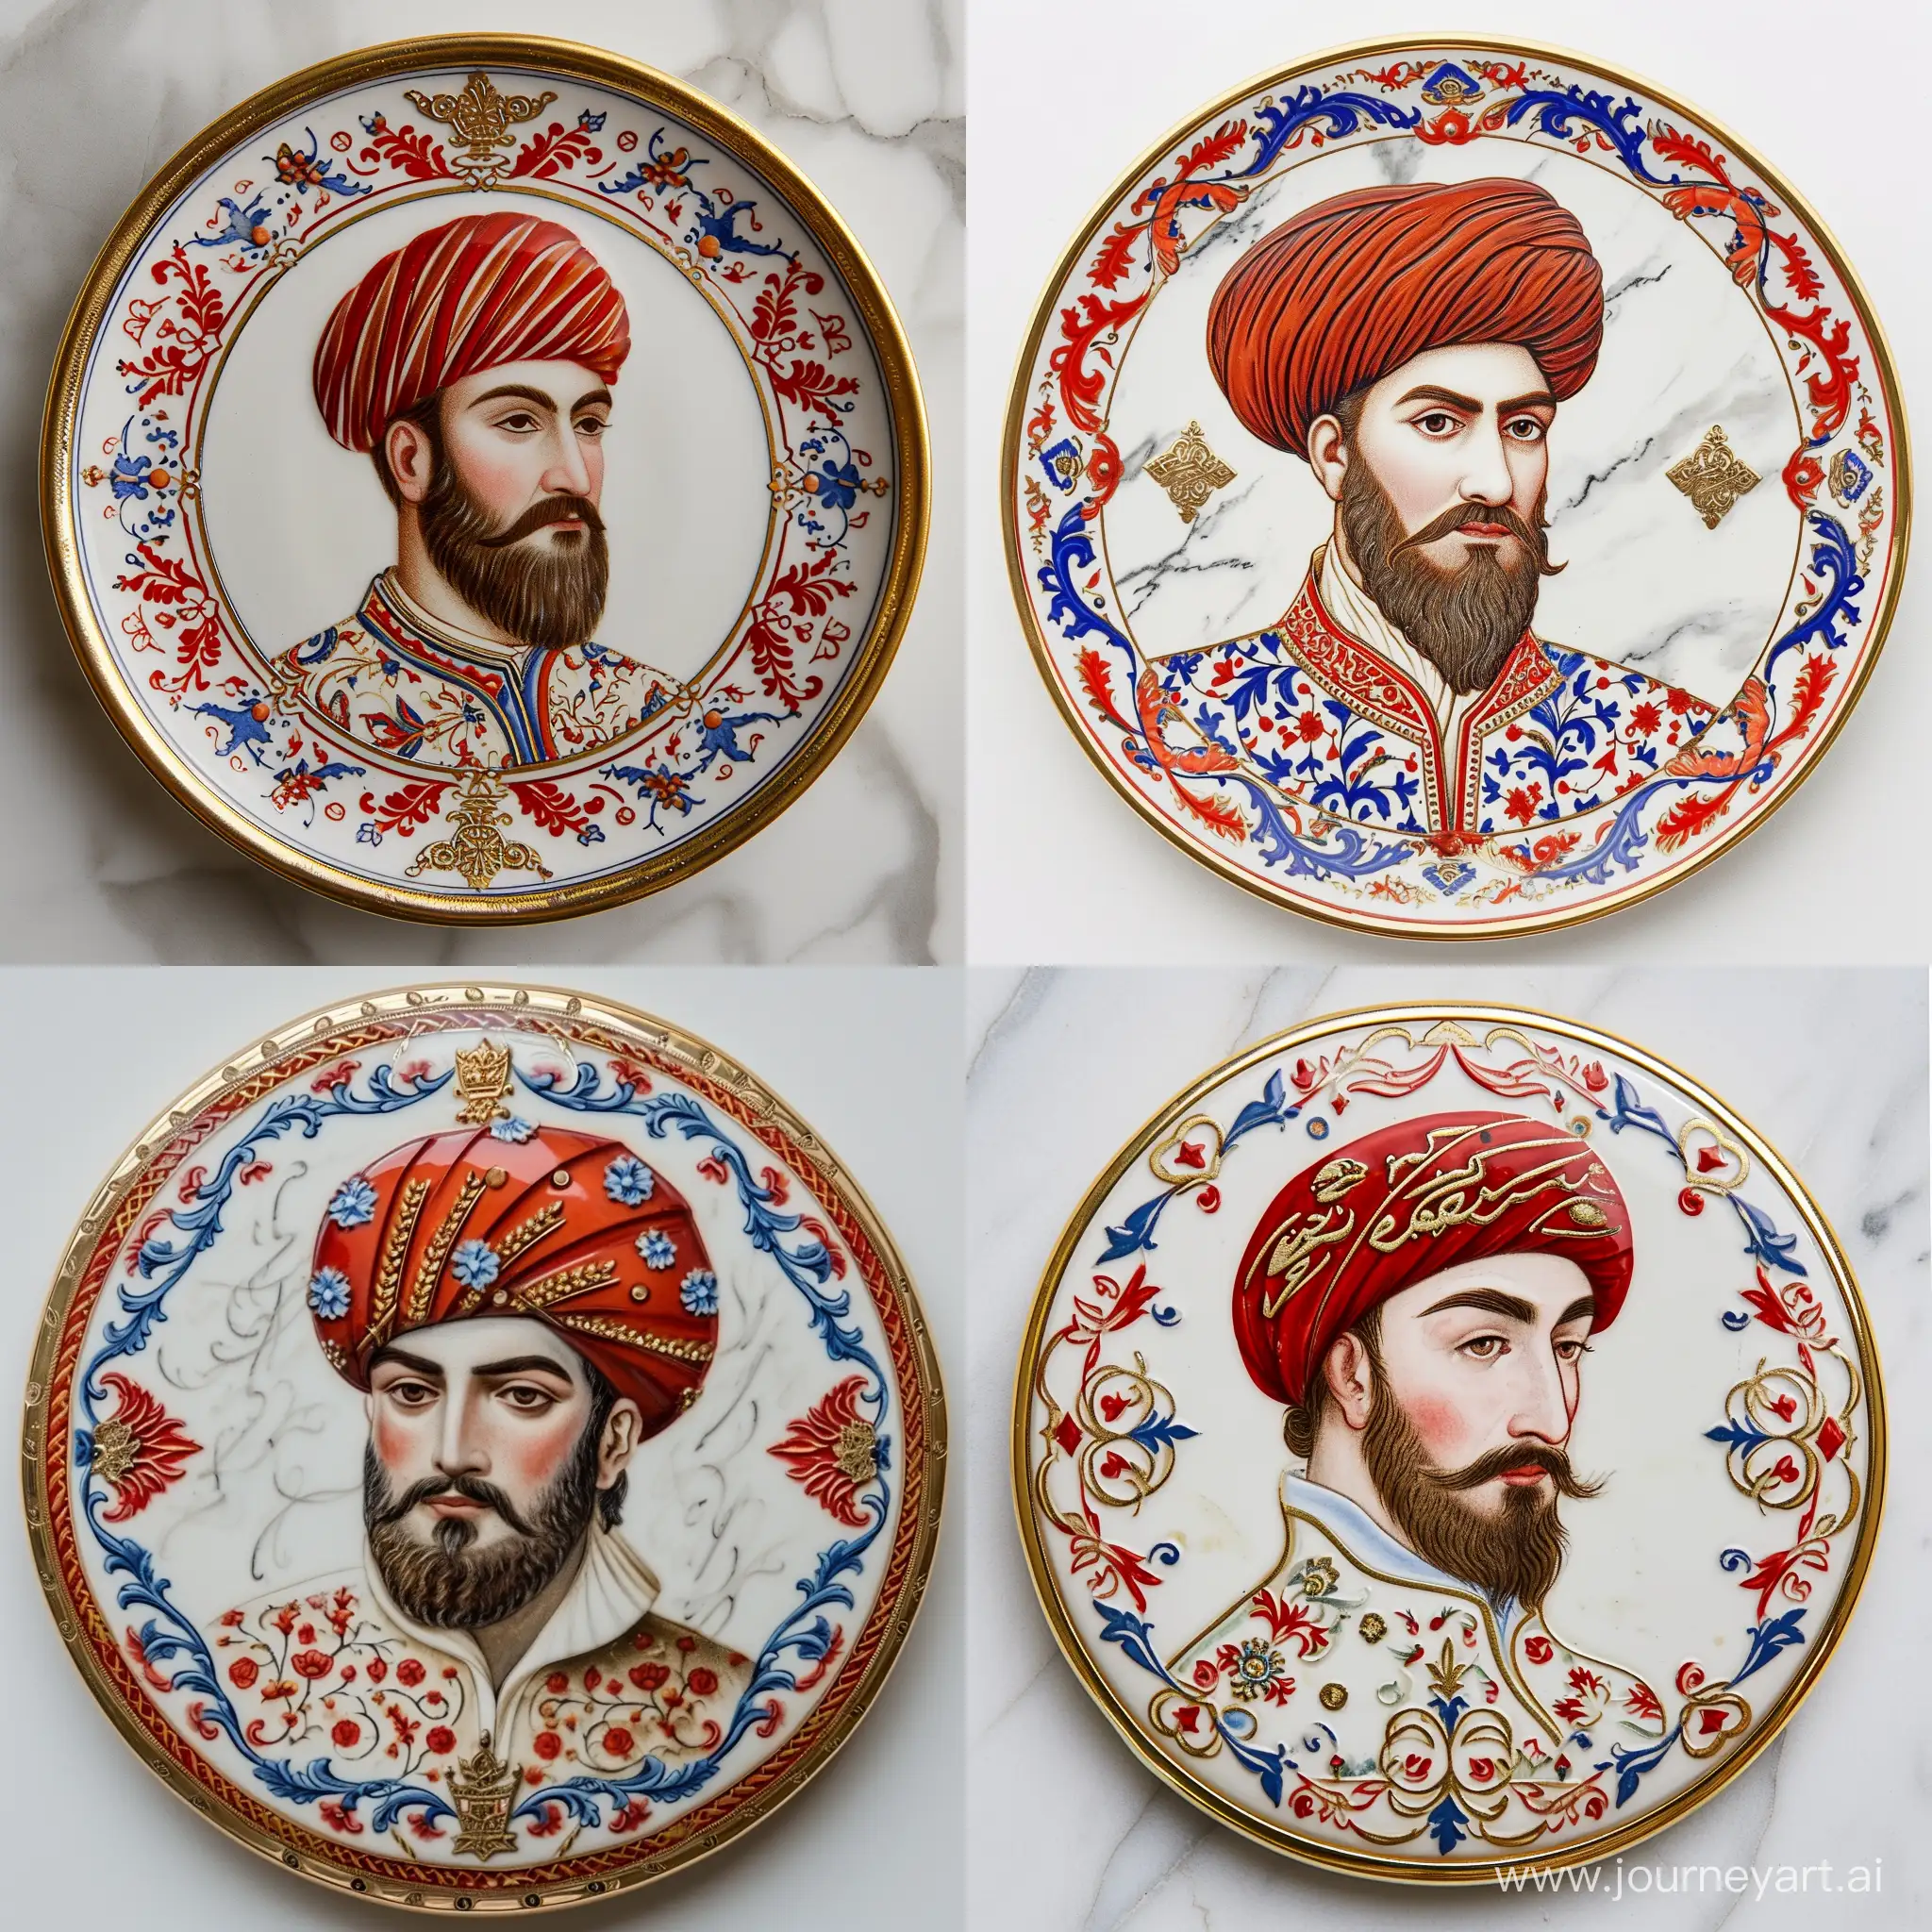 Safavid-Prince-Porcelain-Seal-with-Ottoman-Turban-and-Persian-Attire